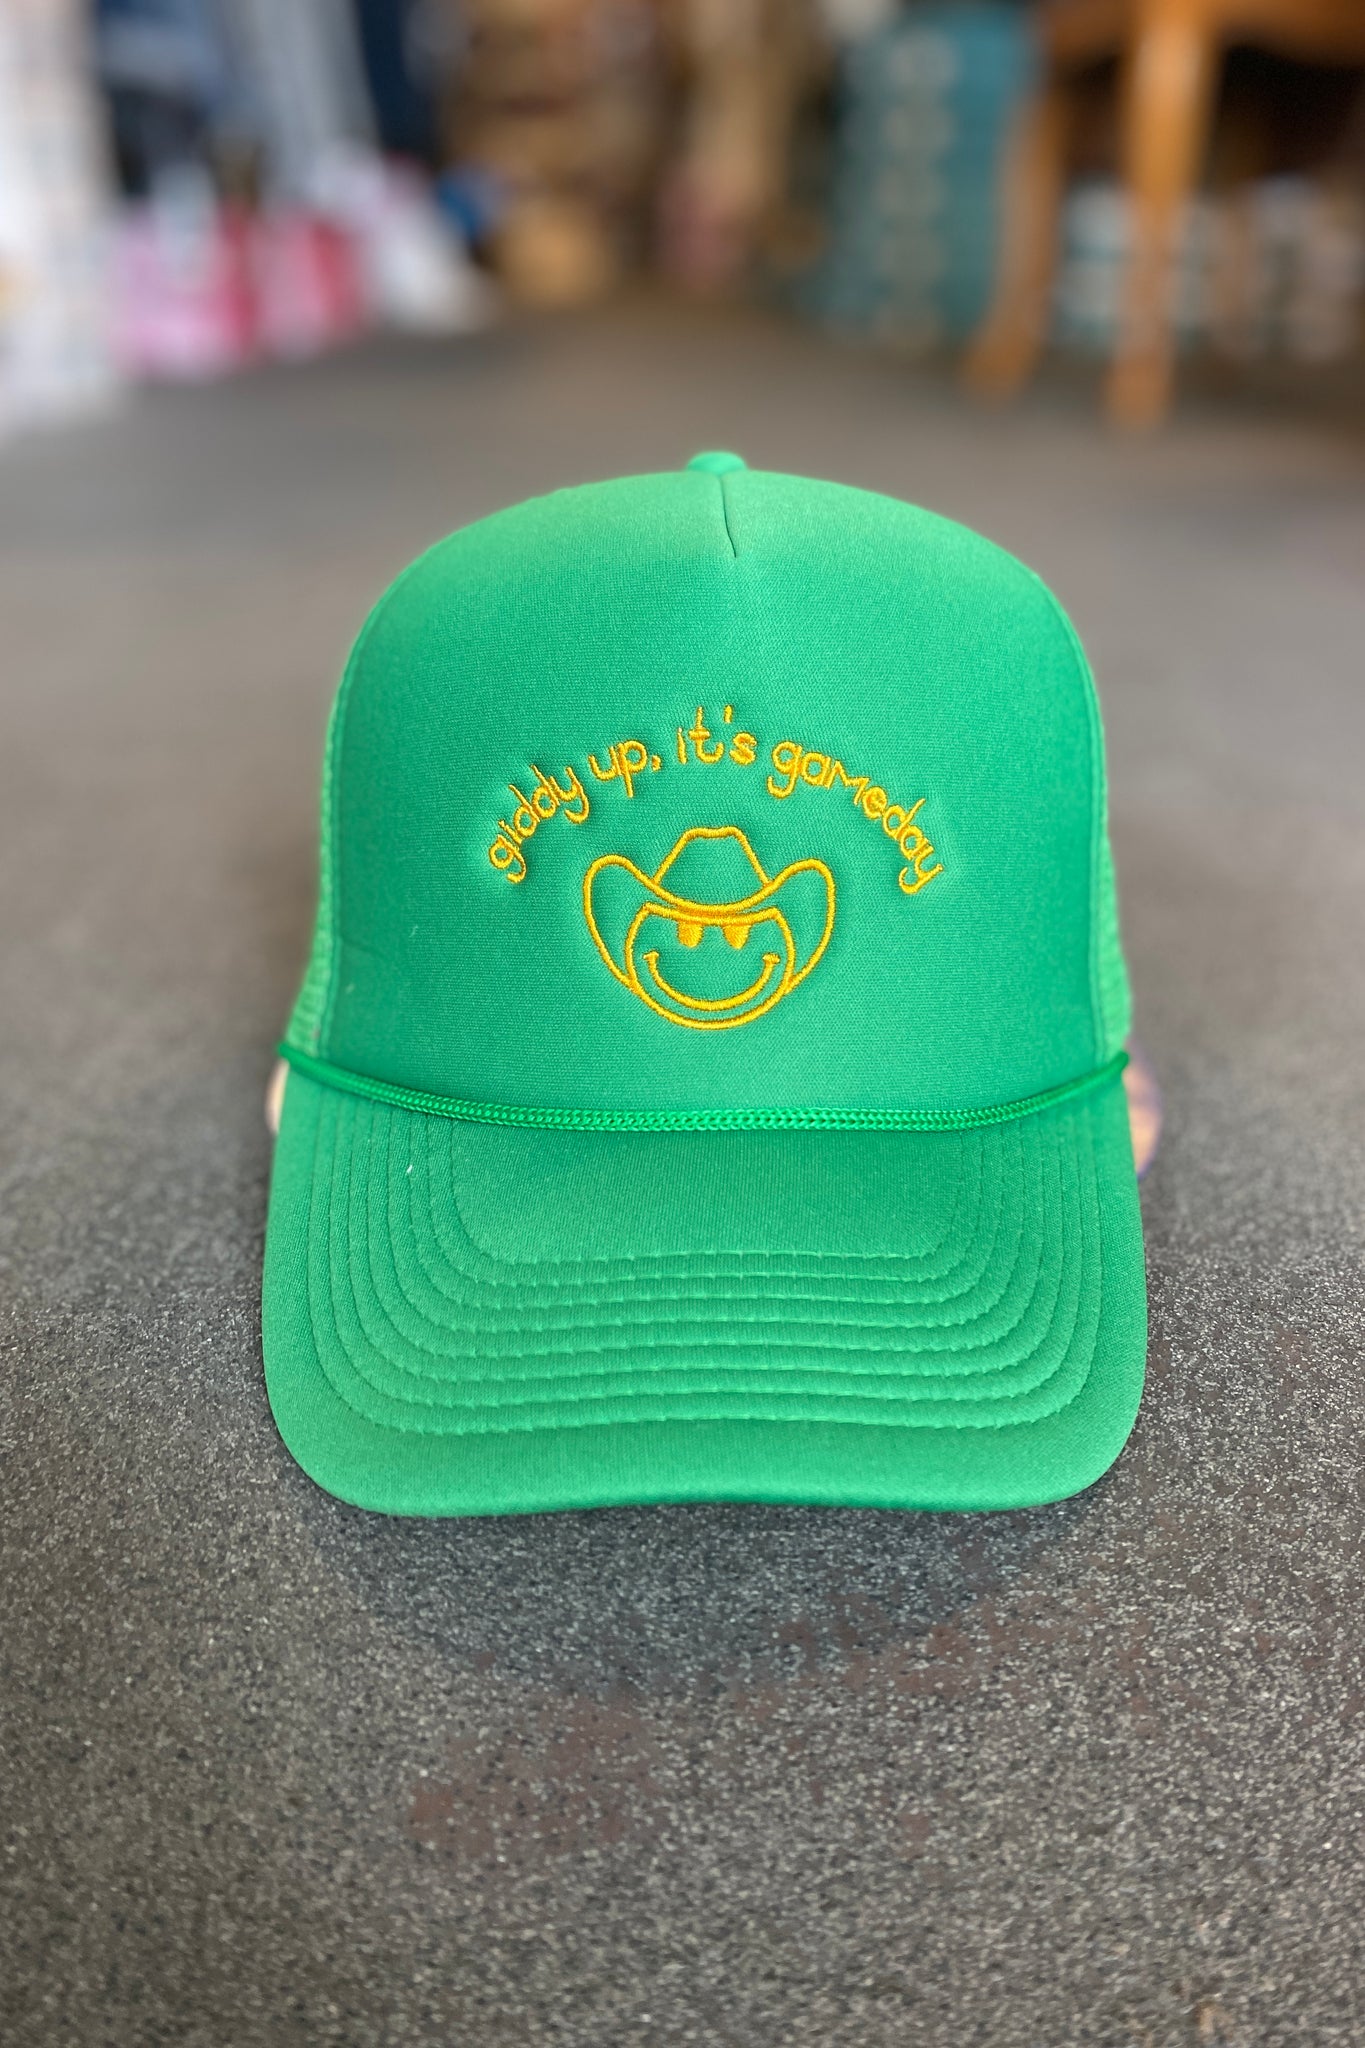 Gameday Trucker Hat - Green & Gold